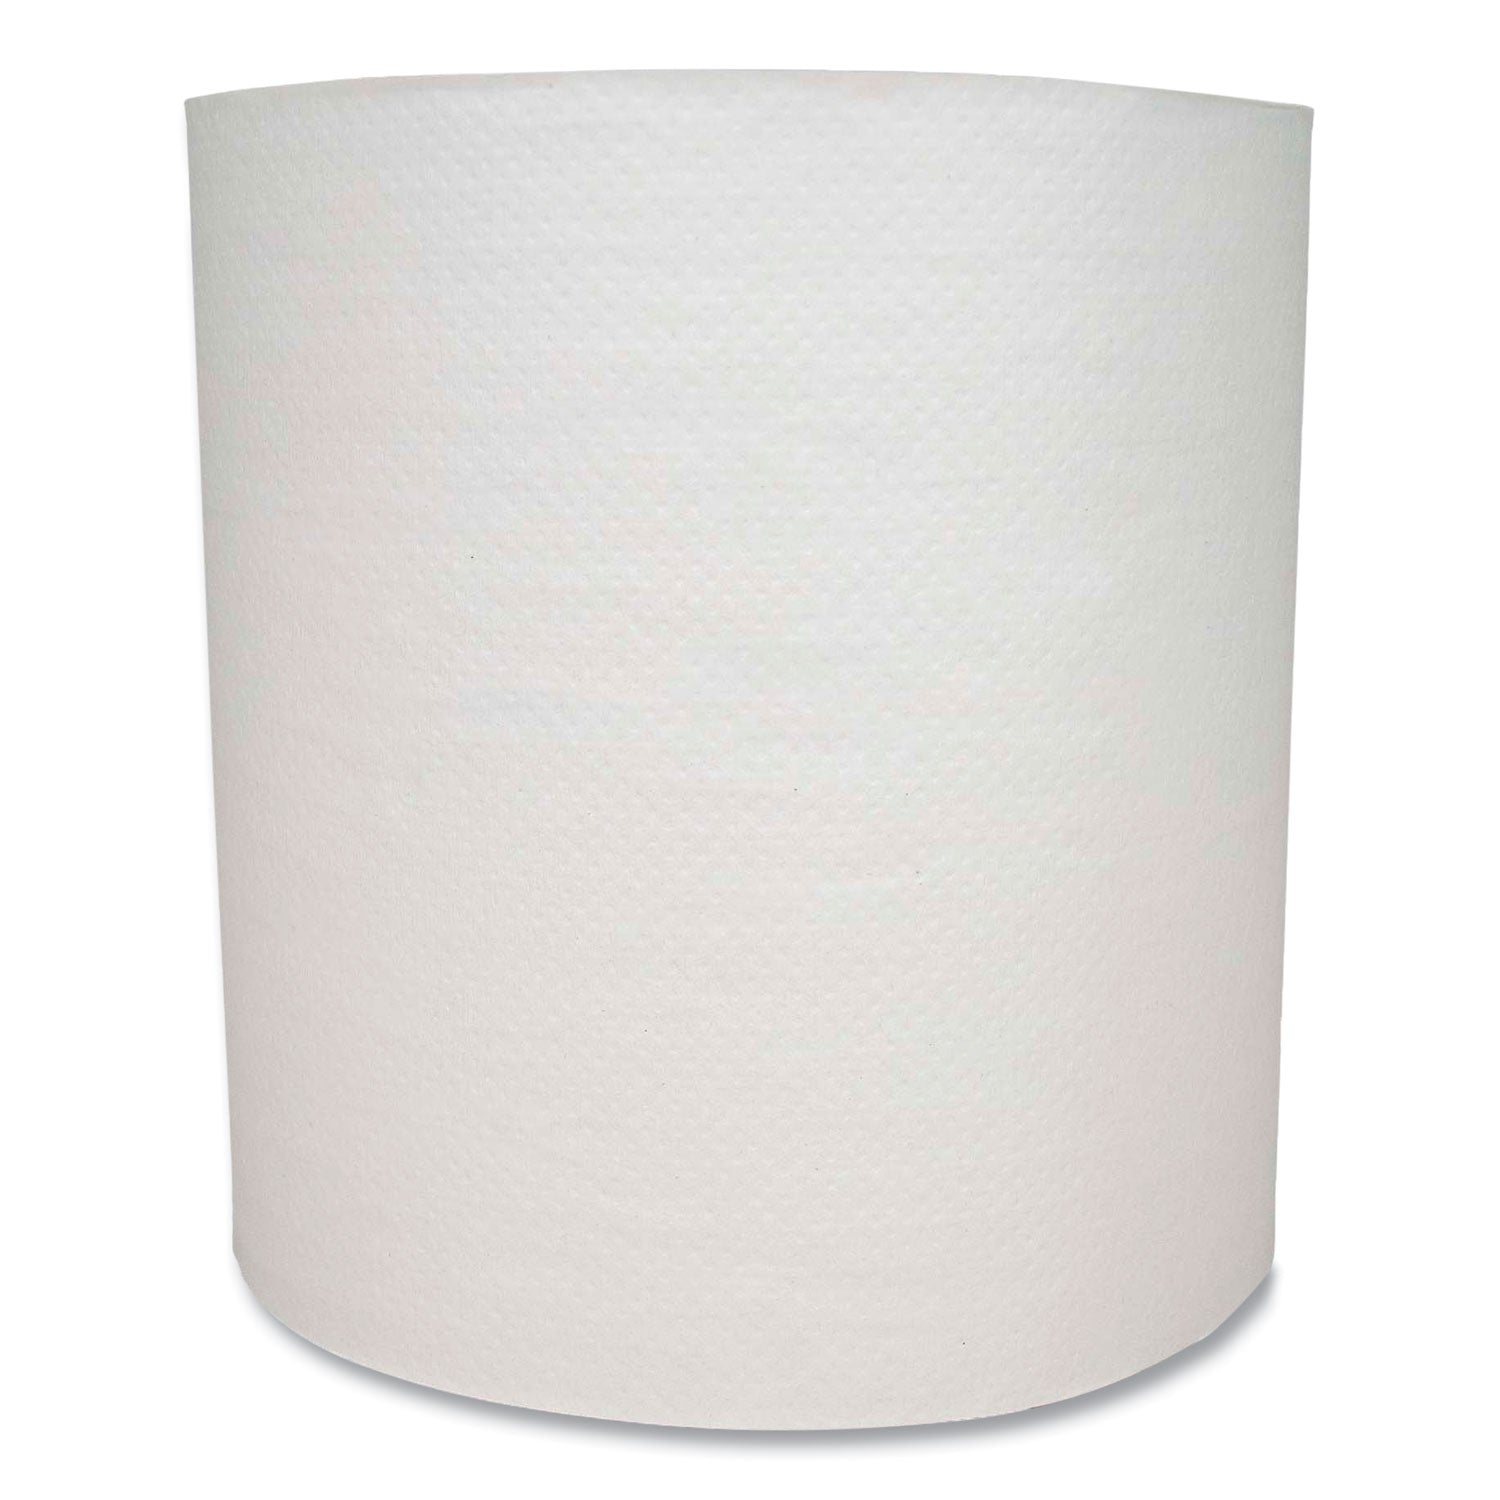 hard-wound-towel-1-ply-8-x-700-ft-white-6-carton_bwk700w - 2